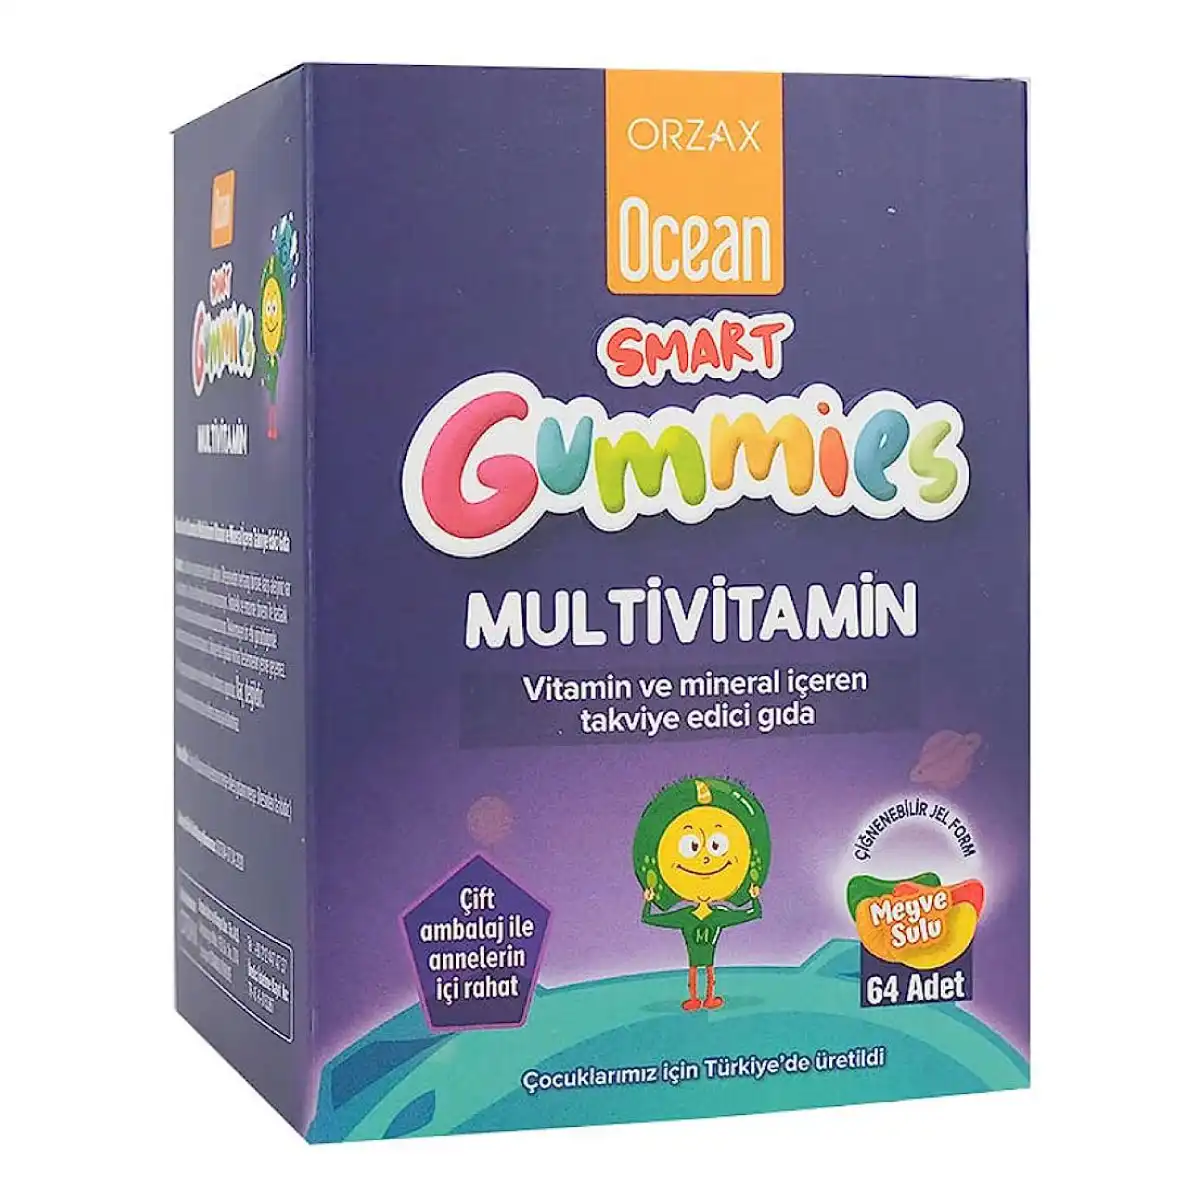 Ocean Smart Gummies Multivitamin